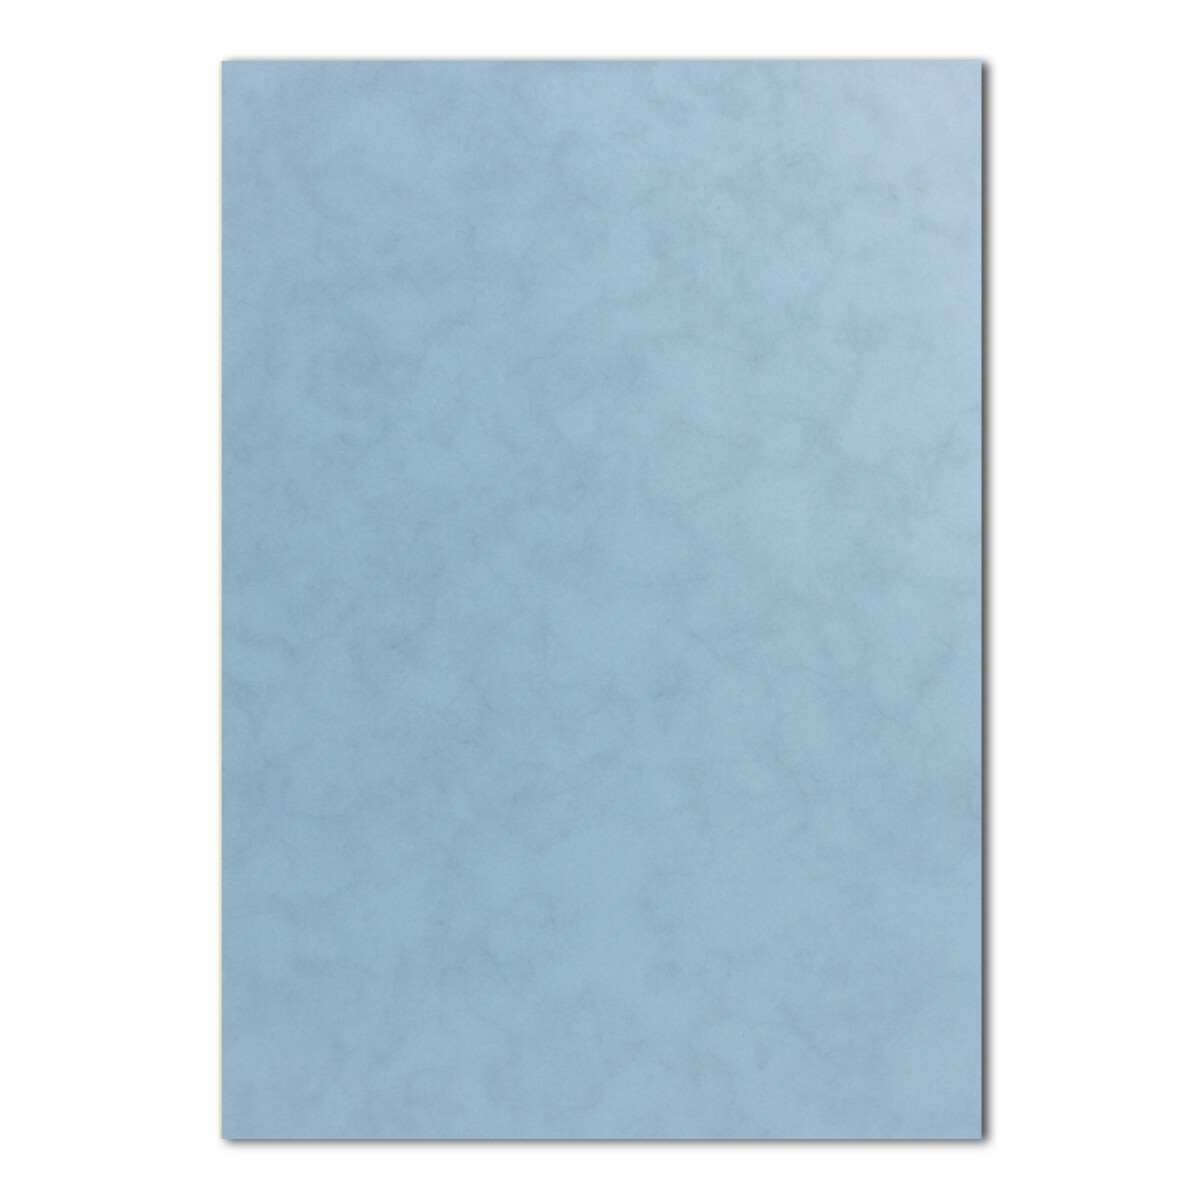 500x DIN A4 Papier - Marmoriert Graublau - 90 g/m² - 21 x 29,7 cm - B,  82,50 €